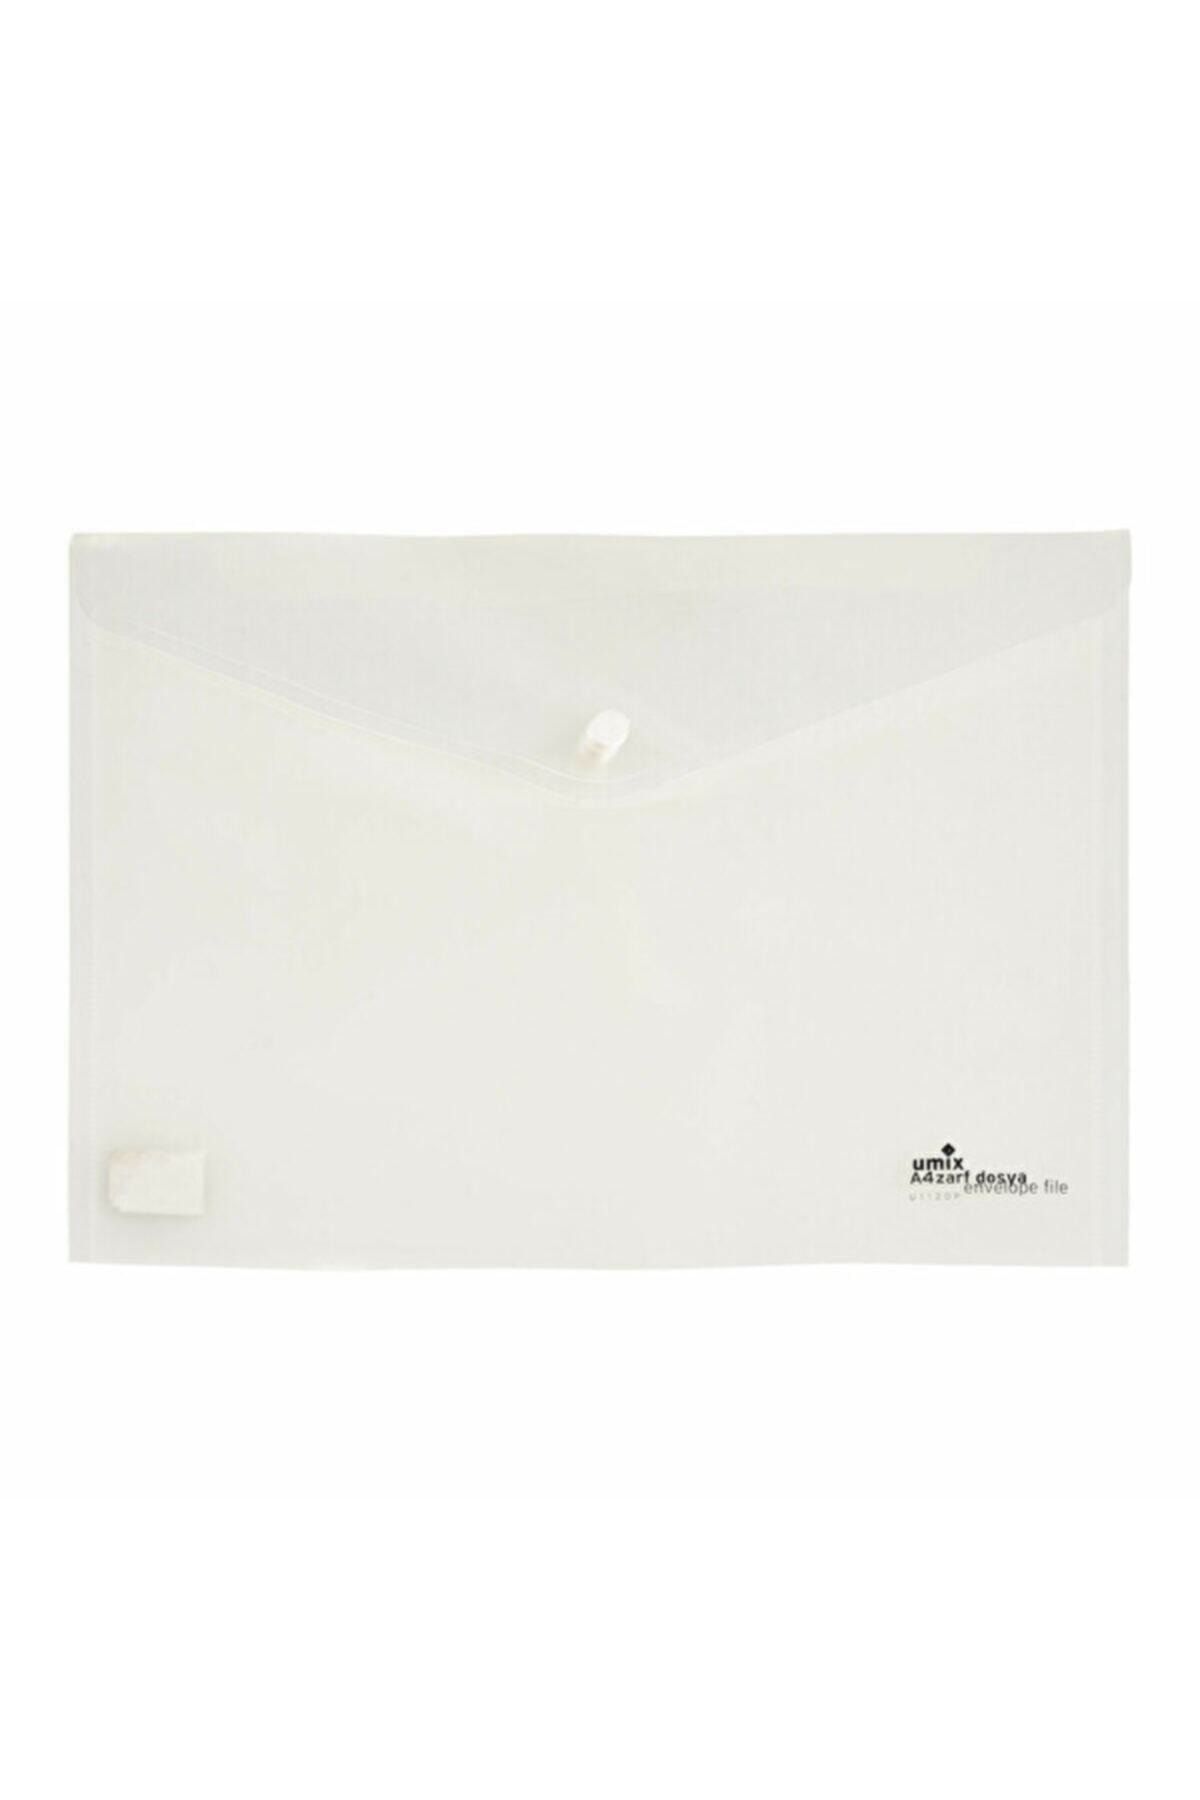 Umix - Çıtçıtlı Şeffaf Zarf Dosya A4 (u1120p-beyaz)